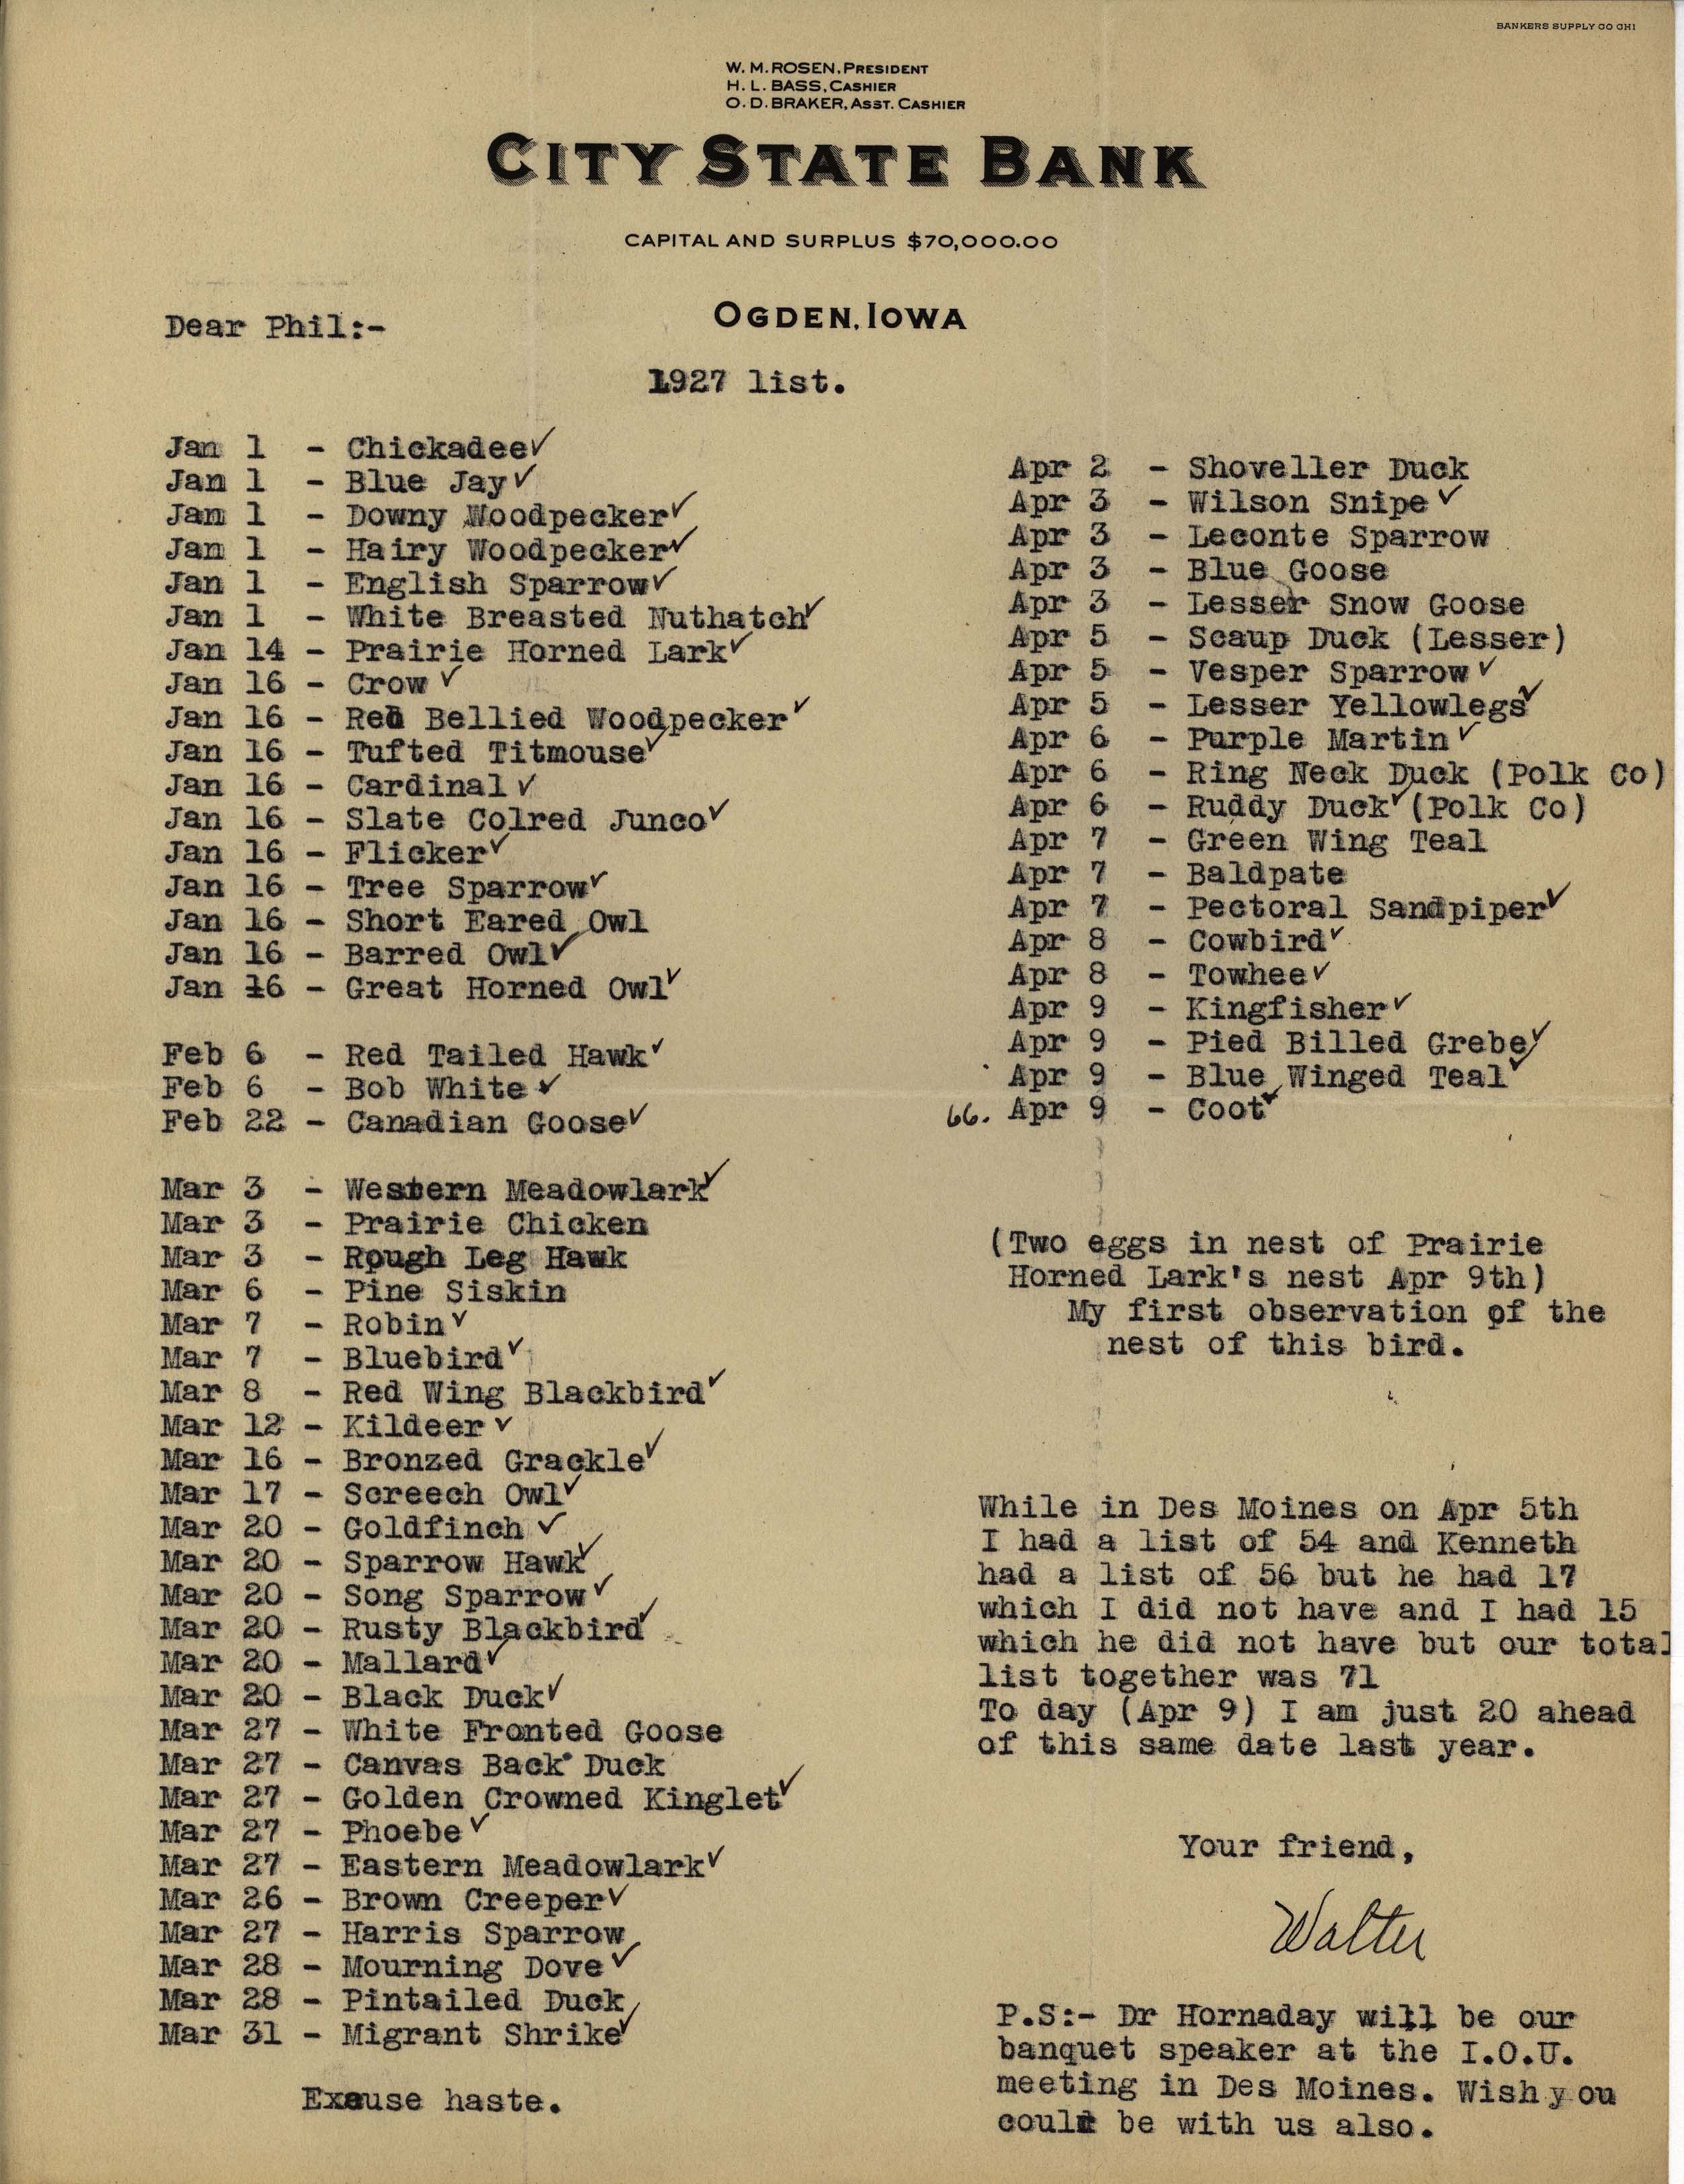 Walter Rosene letter to Philip DuMont regarding yearly bird sighting list, April 9, 1927